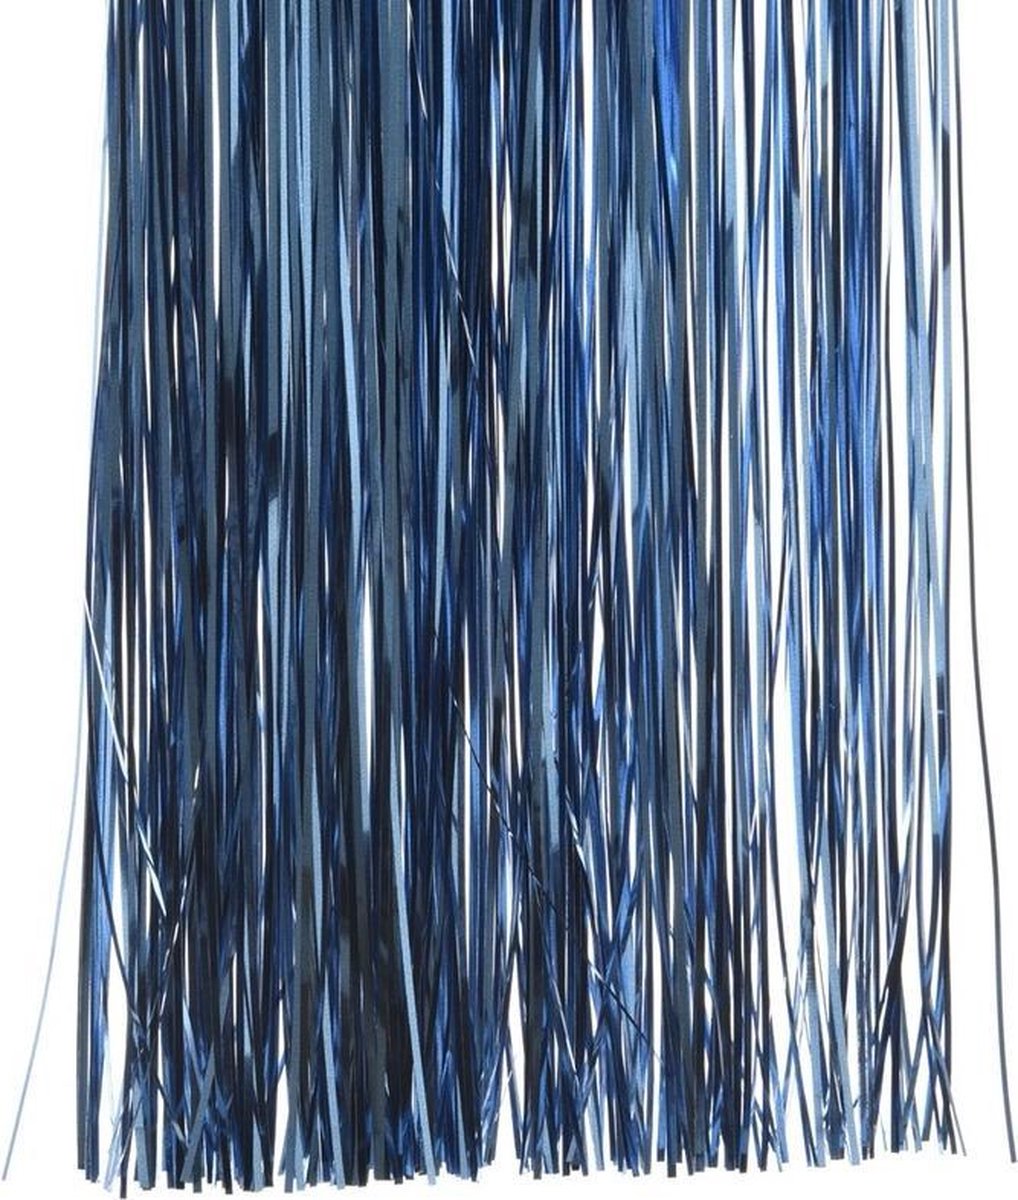 12x Blauwe kerstversiering folie slierten 50 cm